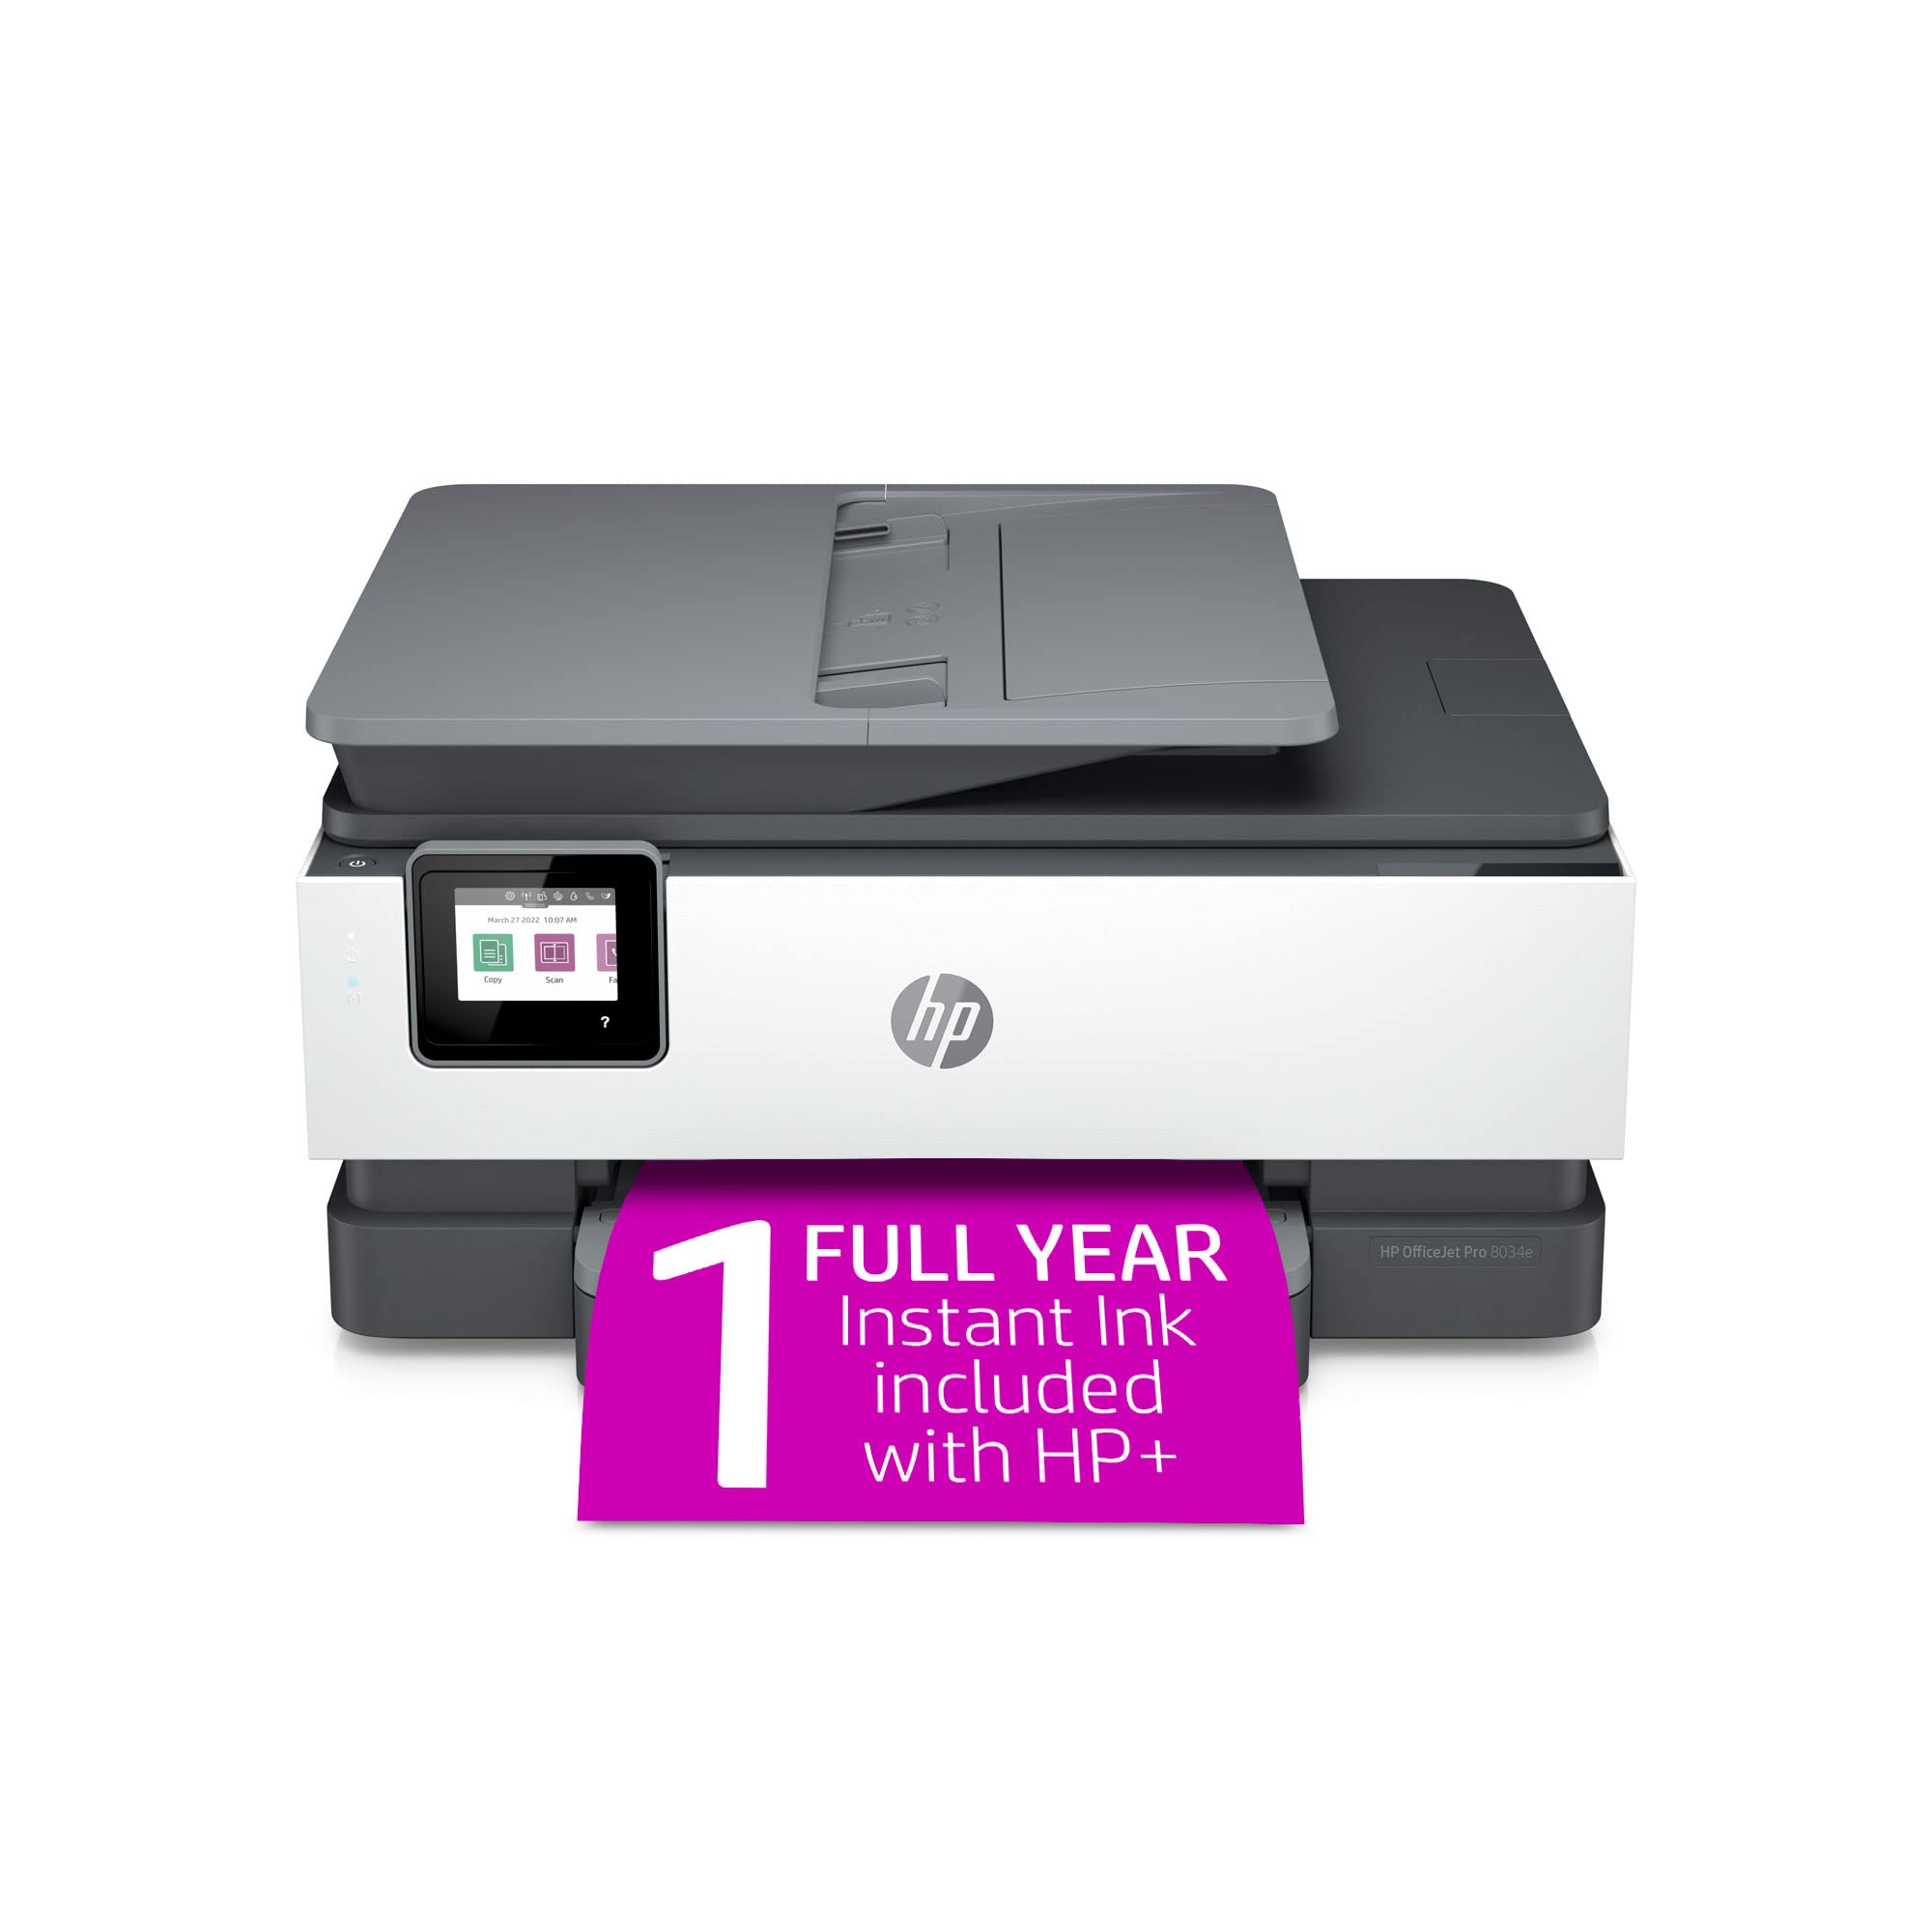 HP OfficeJet Pro 8034e 无线彩色一体式打印机，含 1 年即时墨水